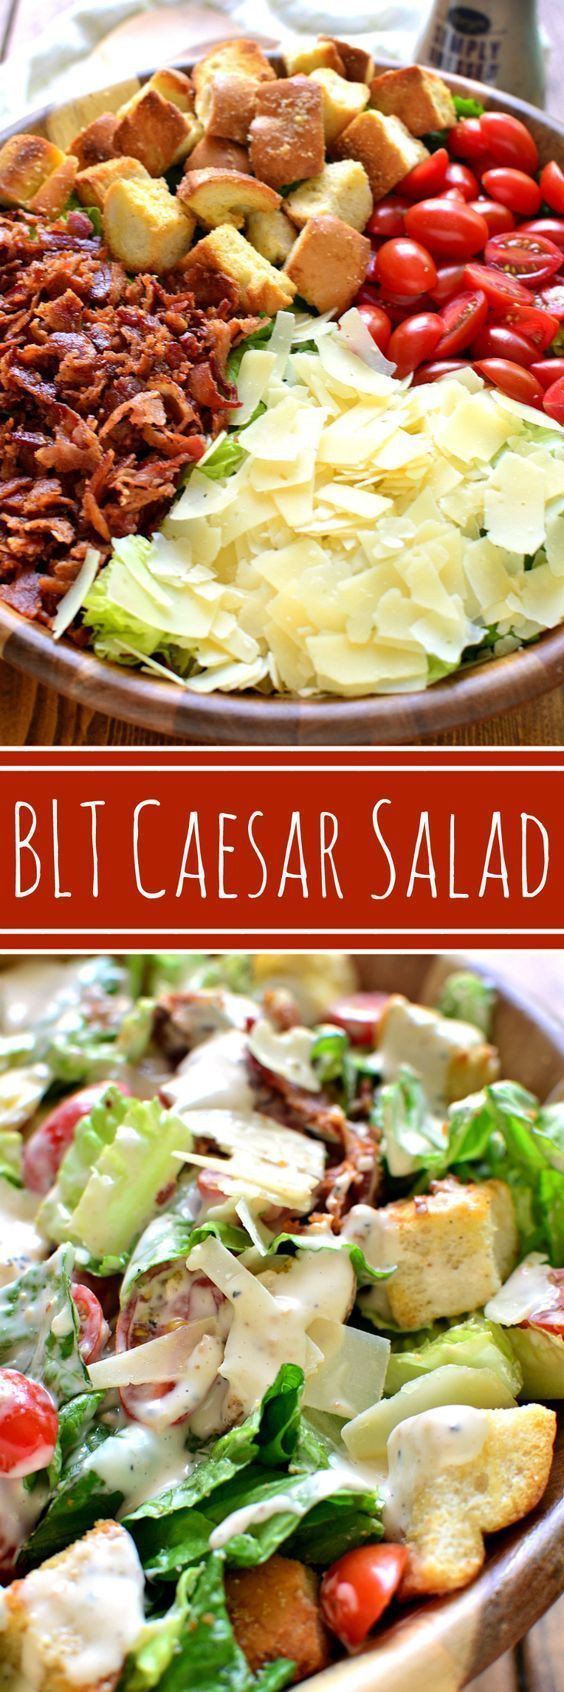 Best Easter Salads
 17 best ideas about Easter Salad on Pinterest